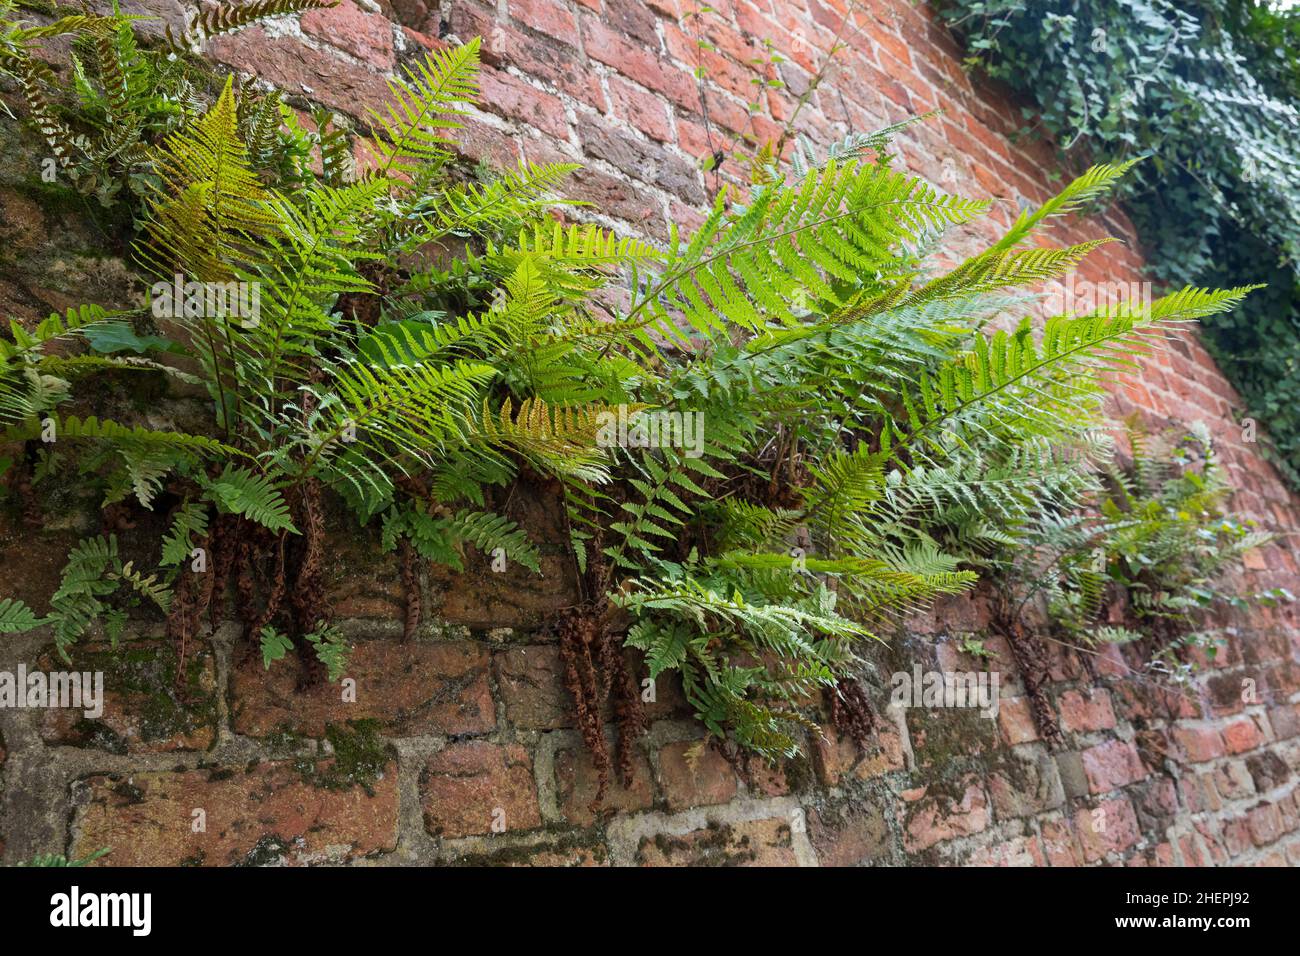 Male fern, Worm fern (Dryopteris filix-mas), growing on a wall, Germany Stock Photo